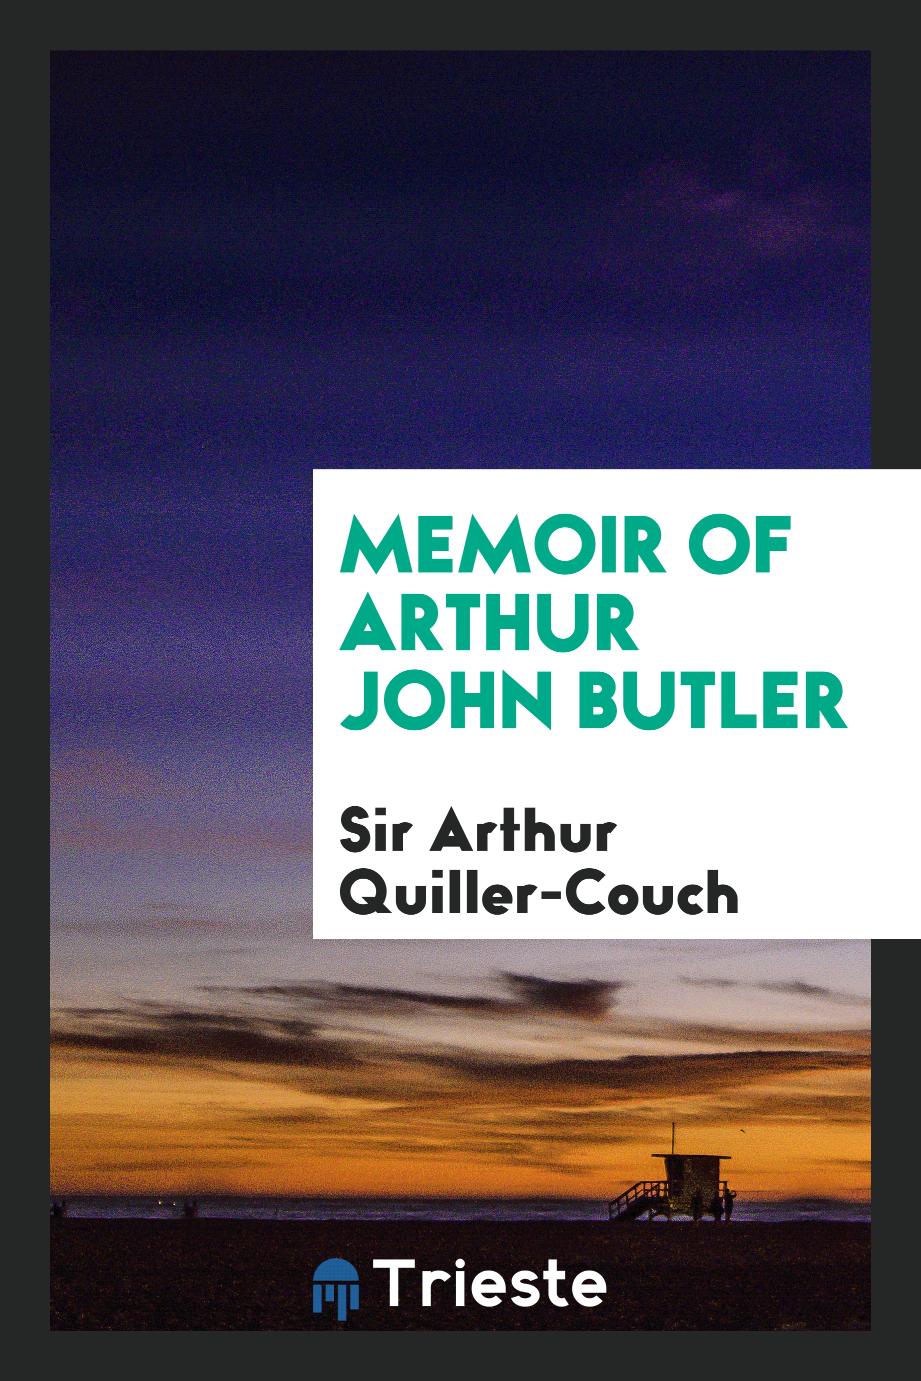 Memoir of Arthur John Butler